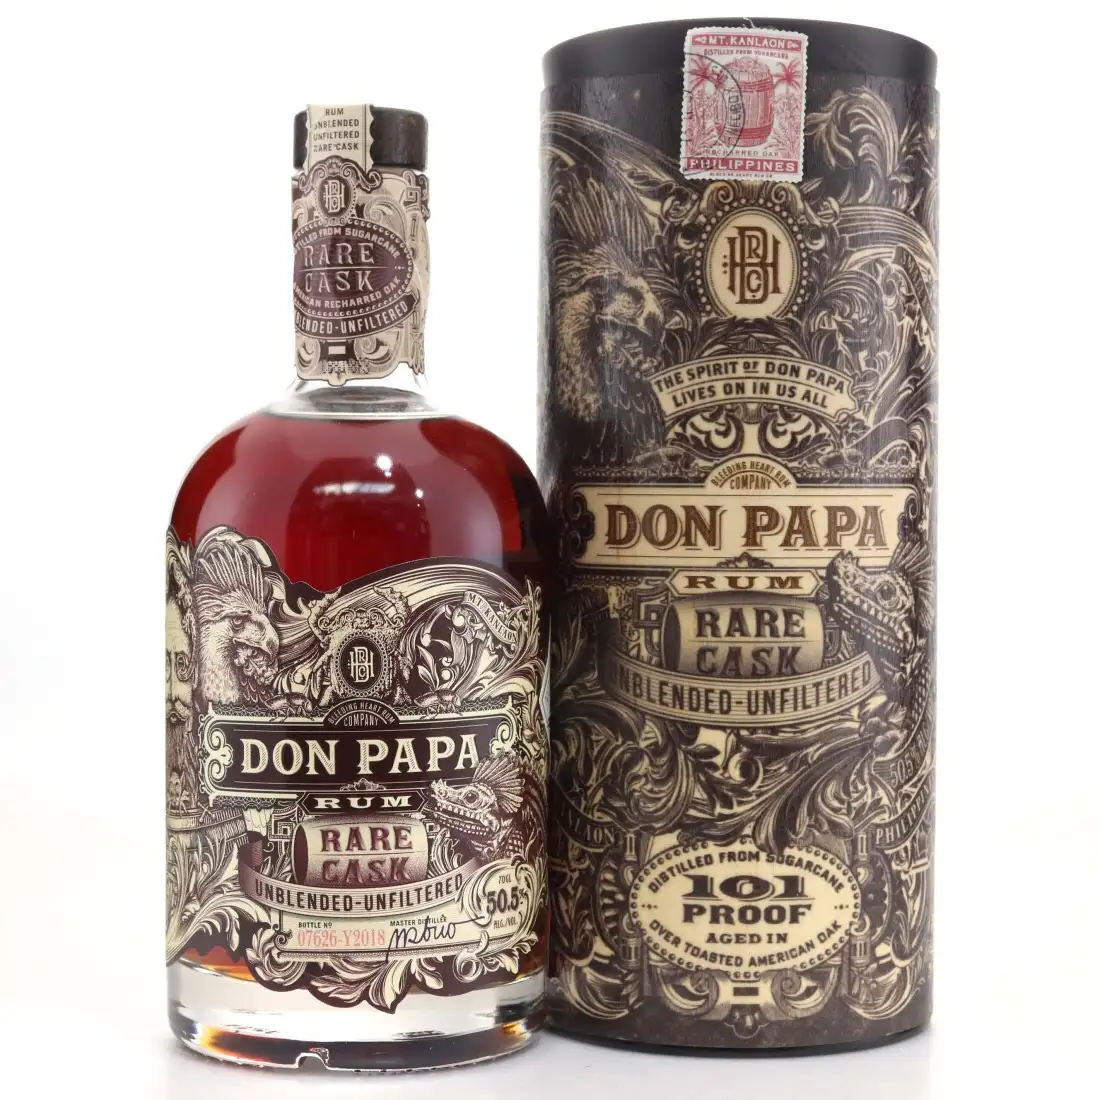 Don Papa Masskara Rum (2018) - Reviews & Buy RX33